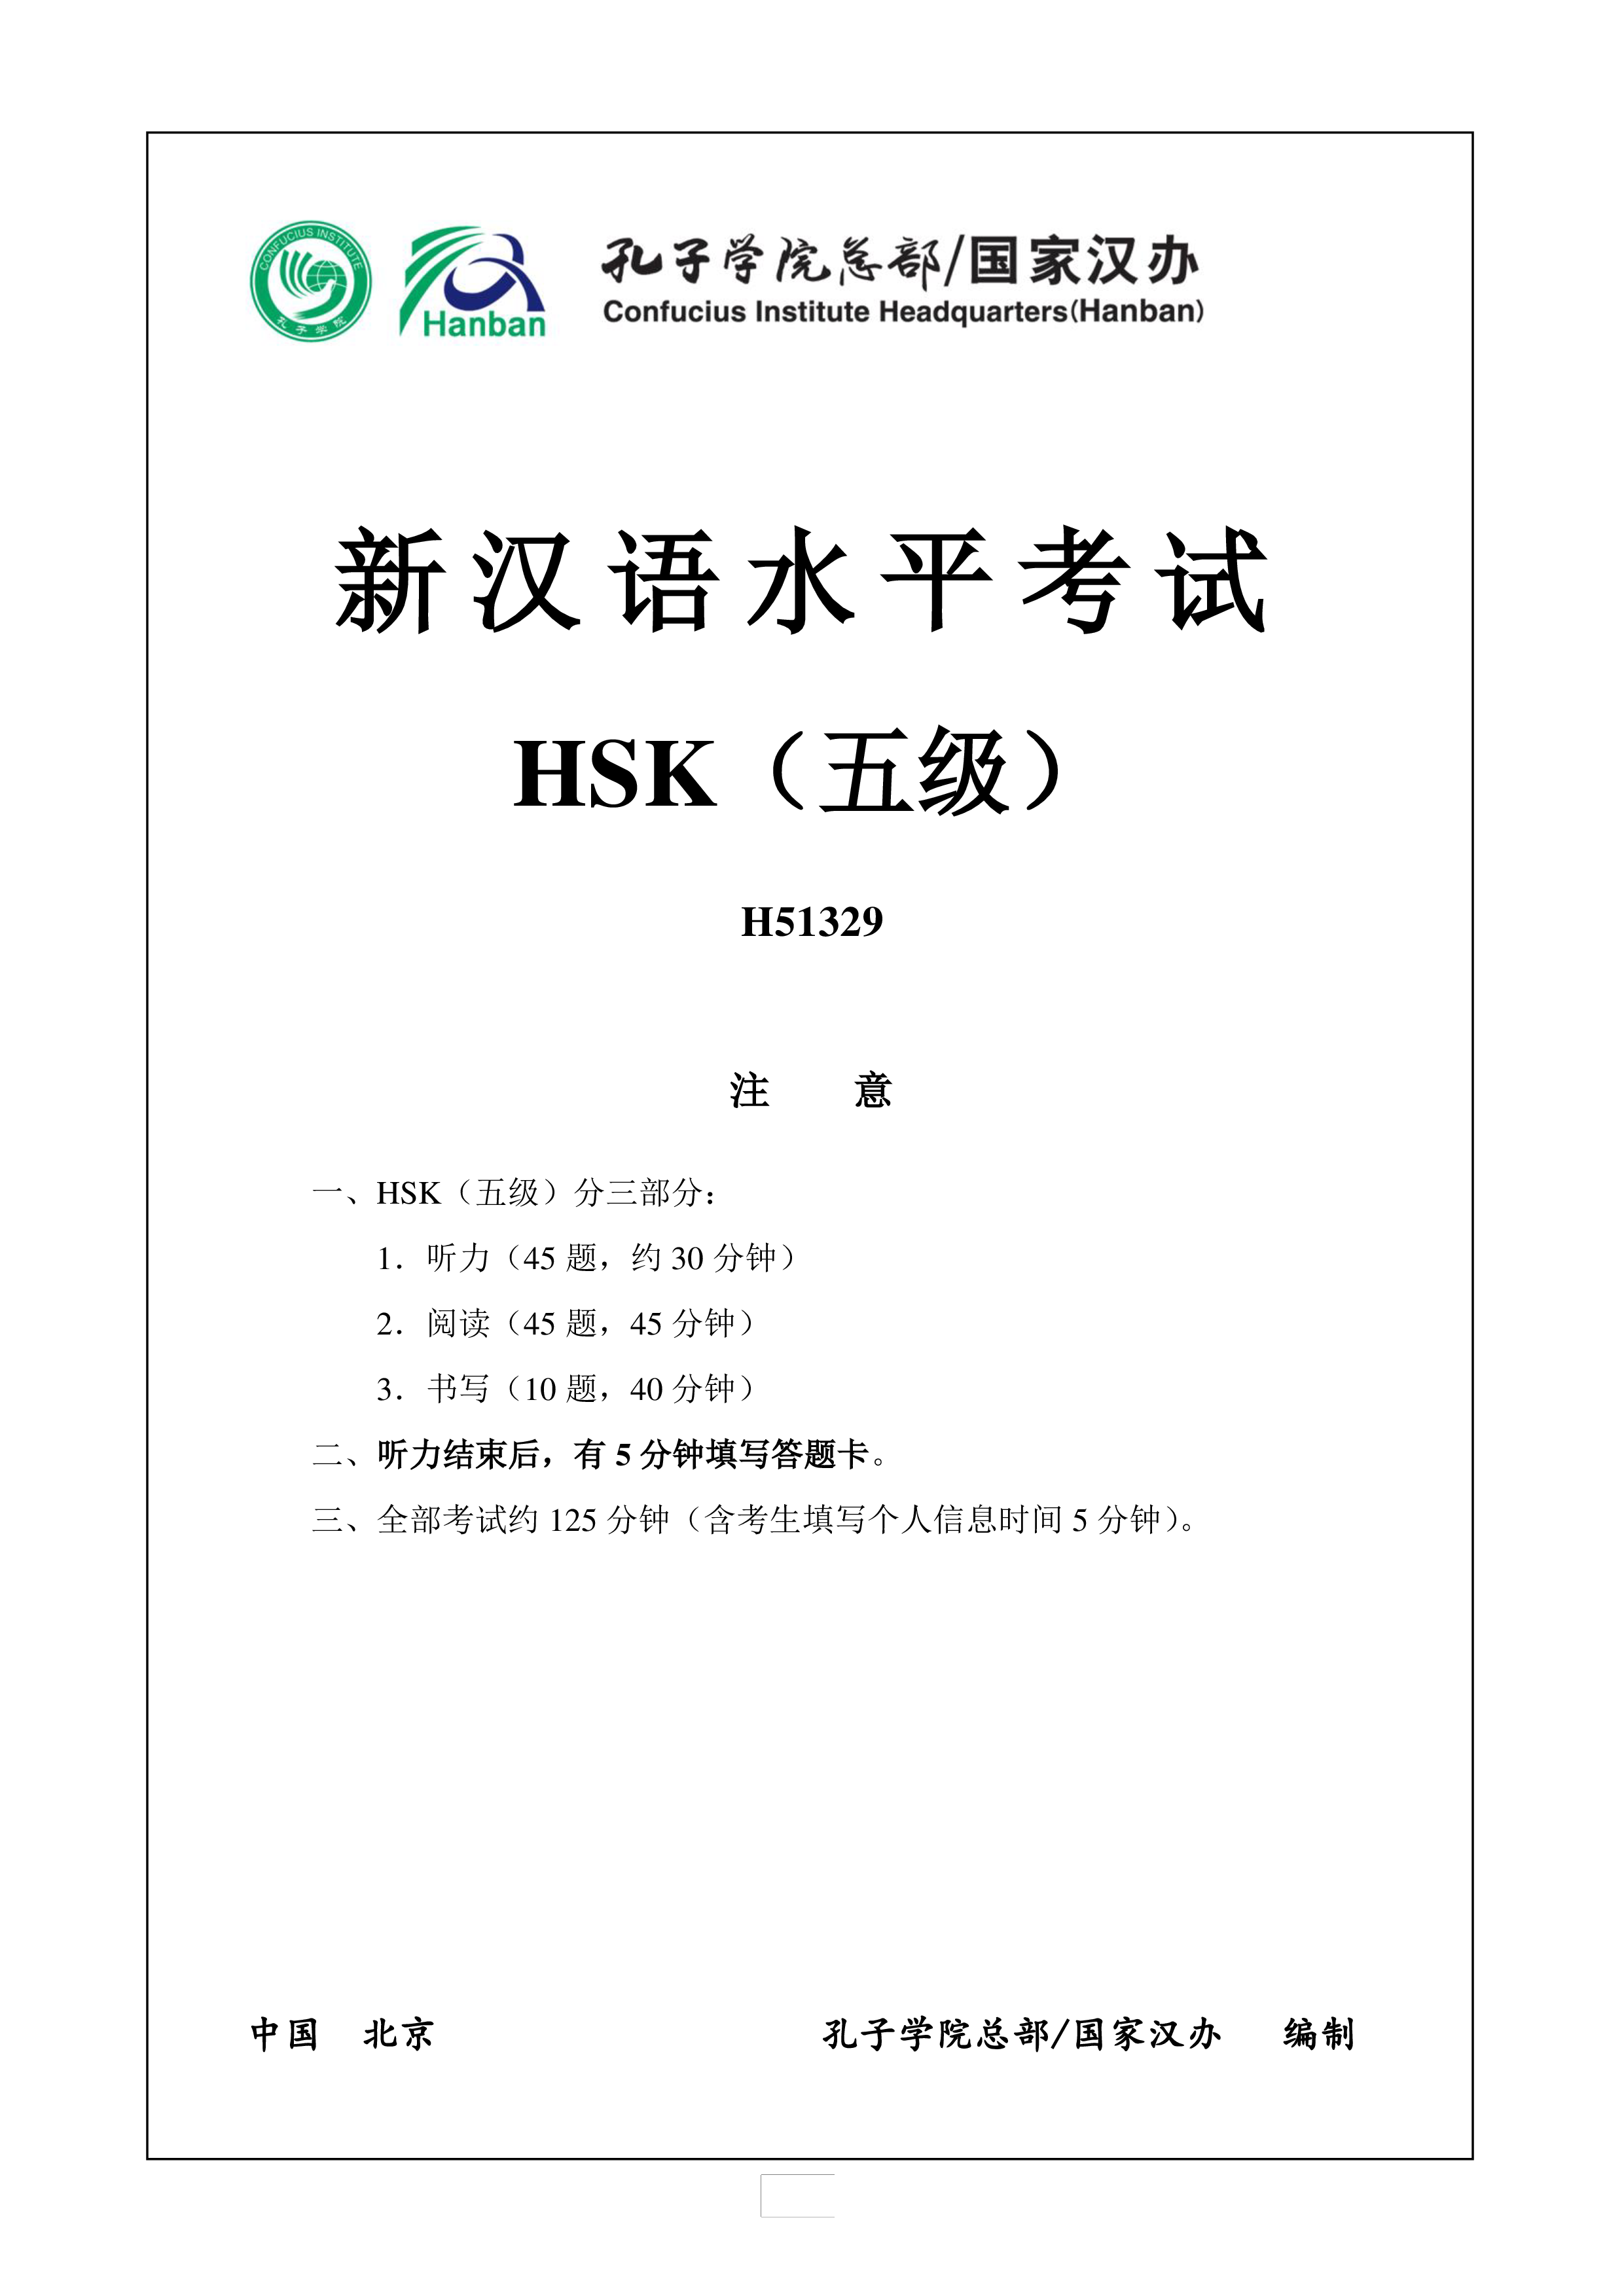 hsk5 chinese exam, incl audio and answer # h51329 plantilla imagen principal